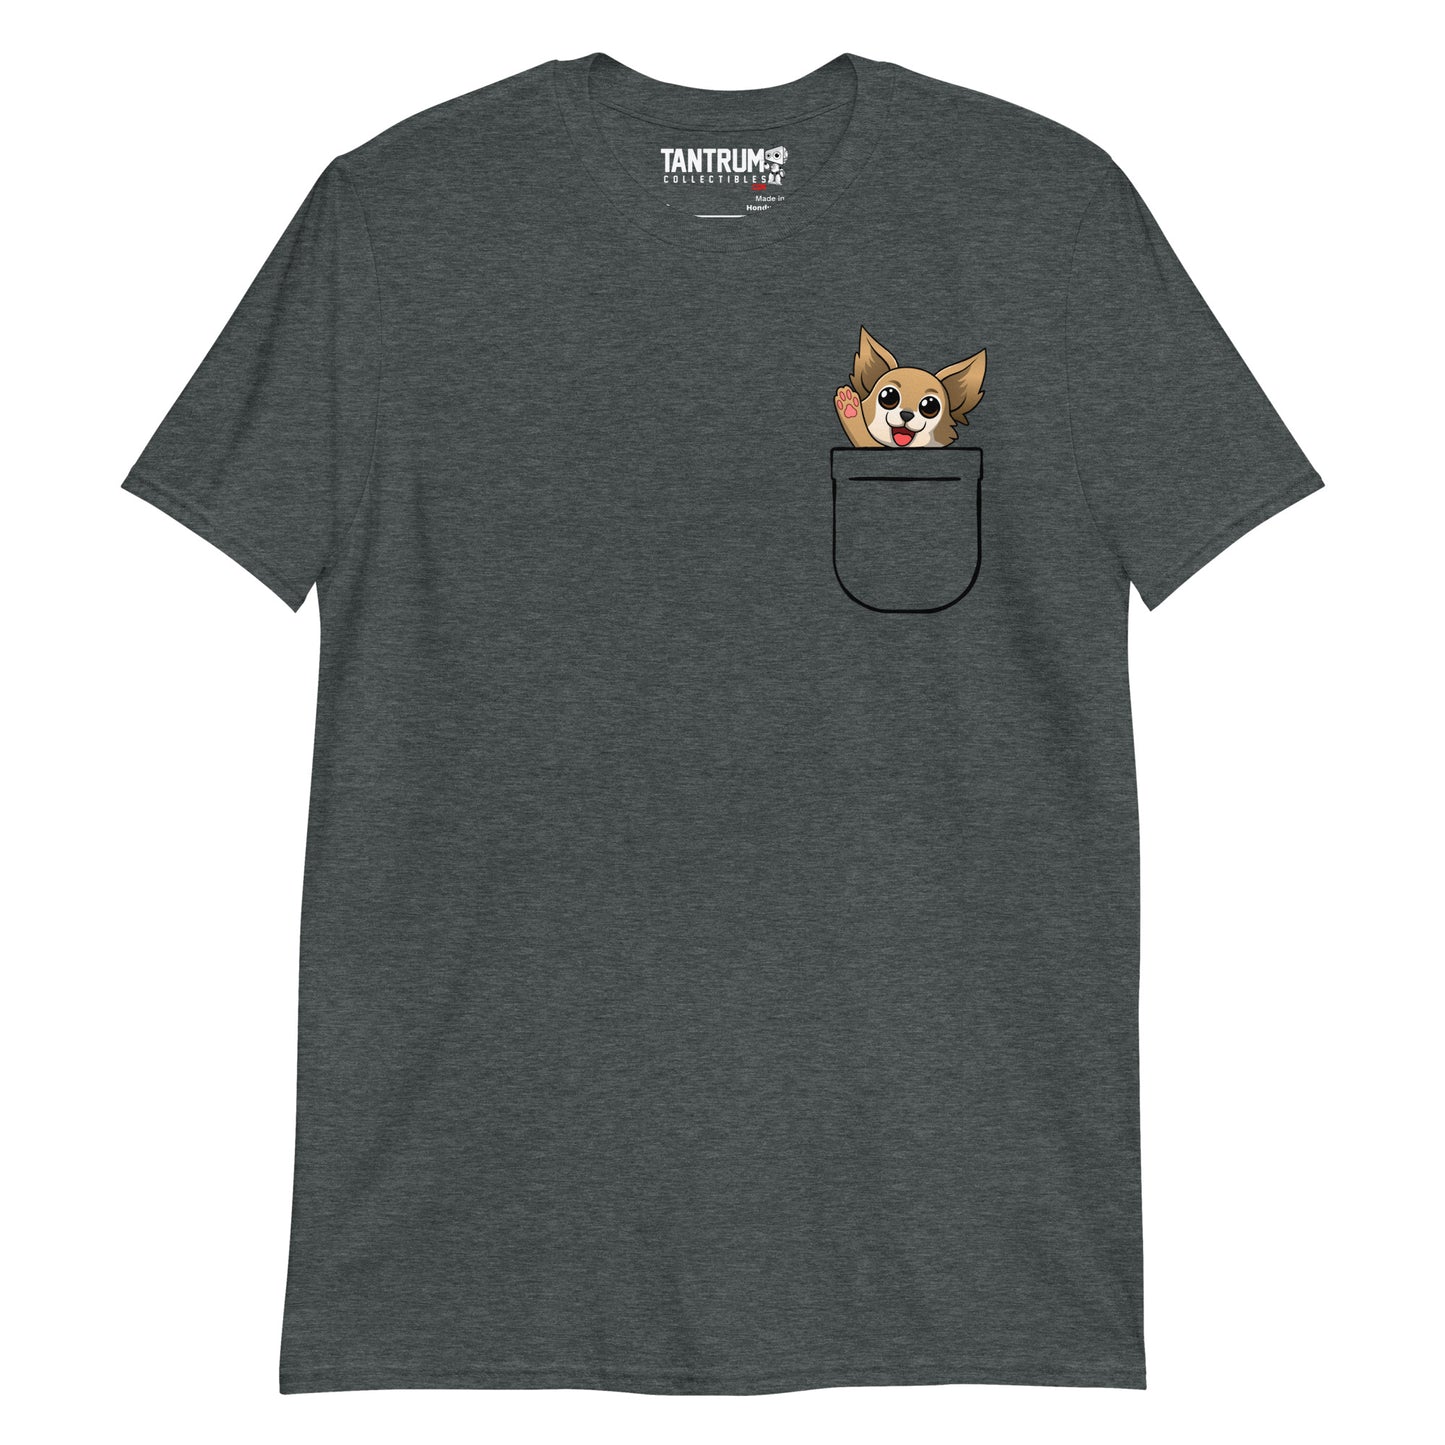 HeyyDelta - Unisex T-Shirt - Printed Pocket (Series 1) Hey